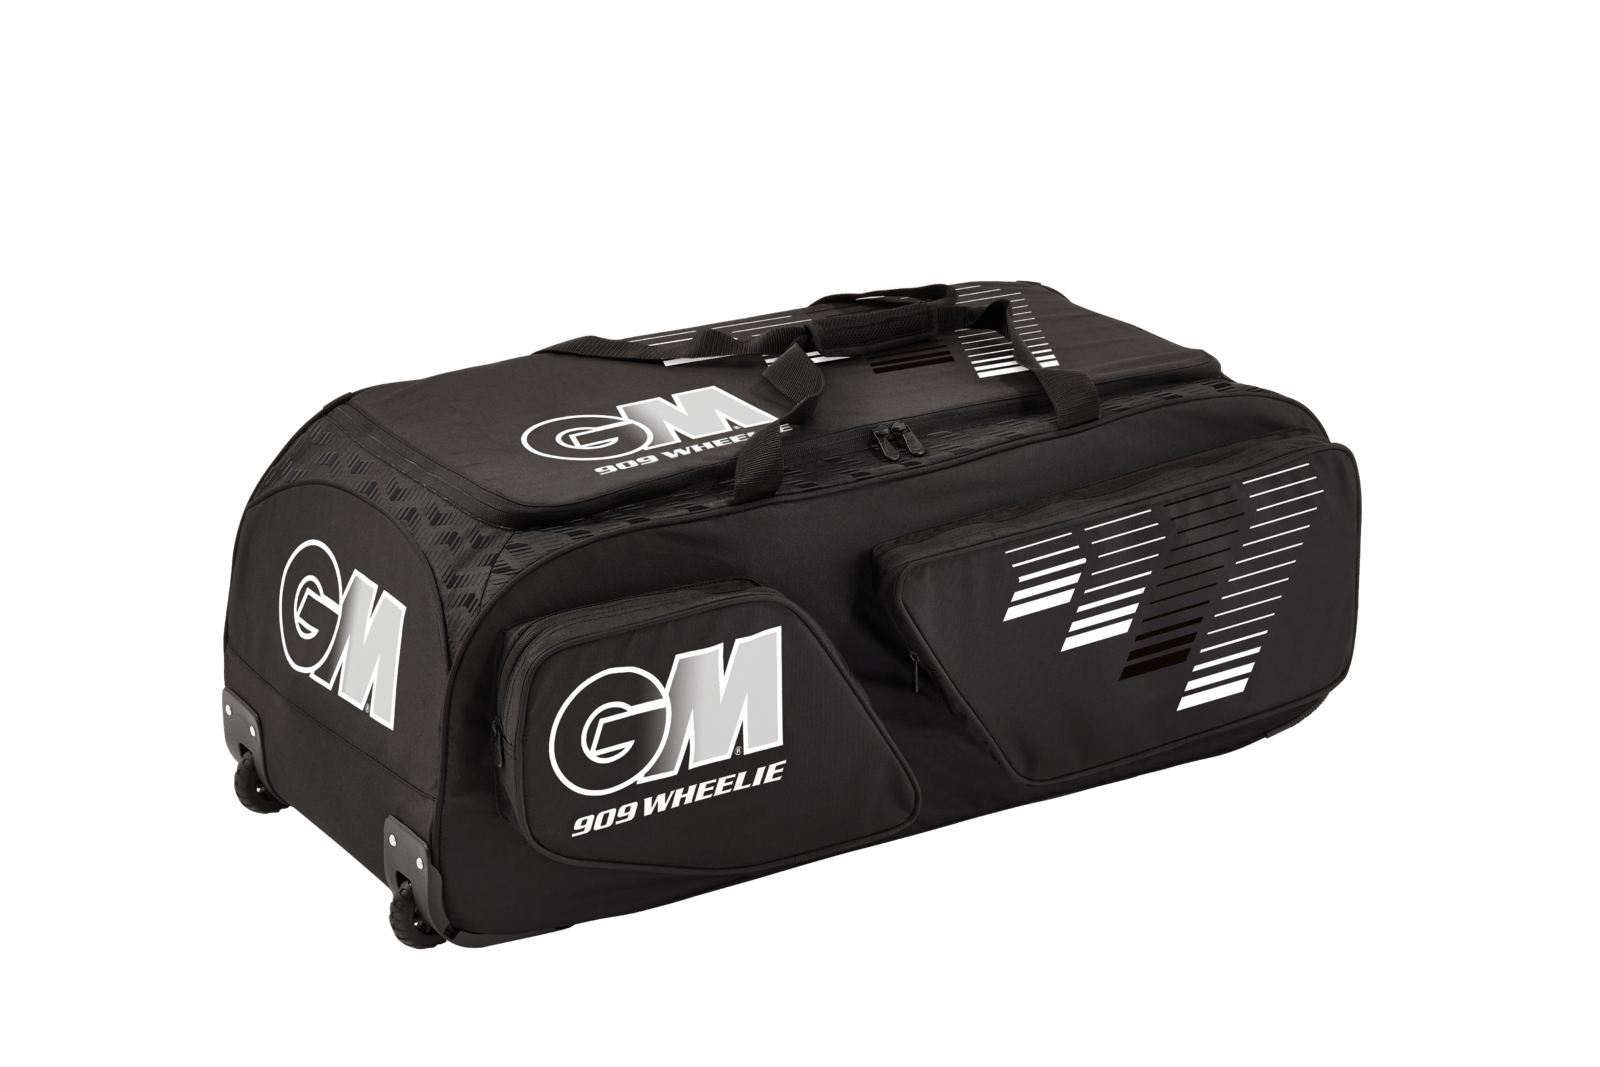 Gunn & Moore Cricket Bags Black GM 909 Wheelie Cricket Bag